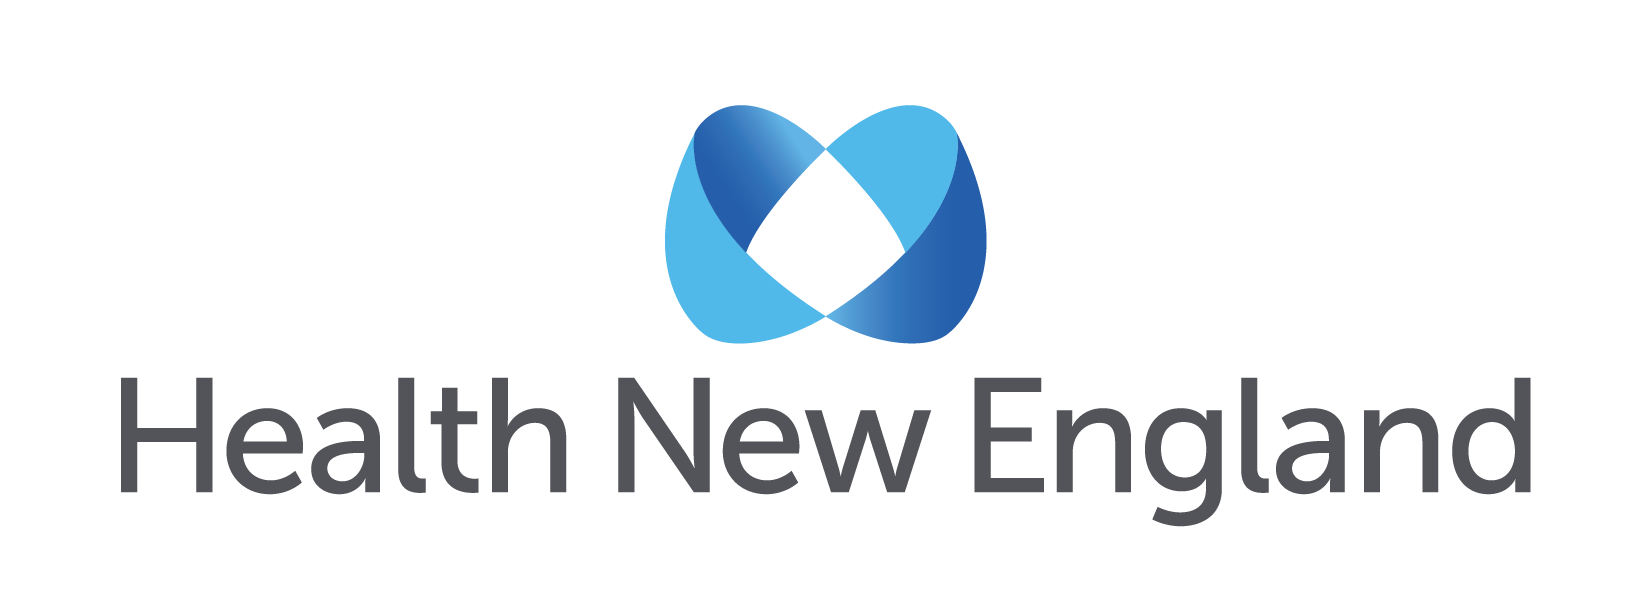 Health New England logo